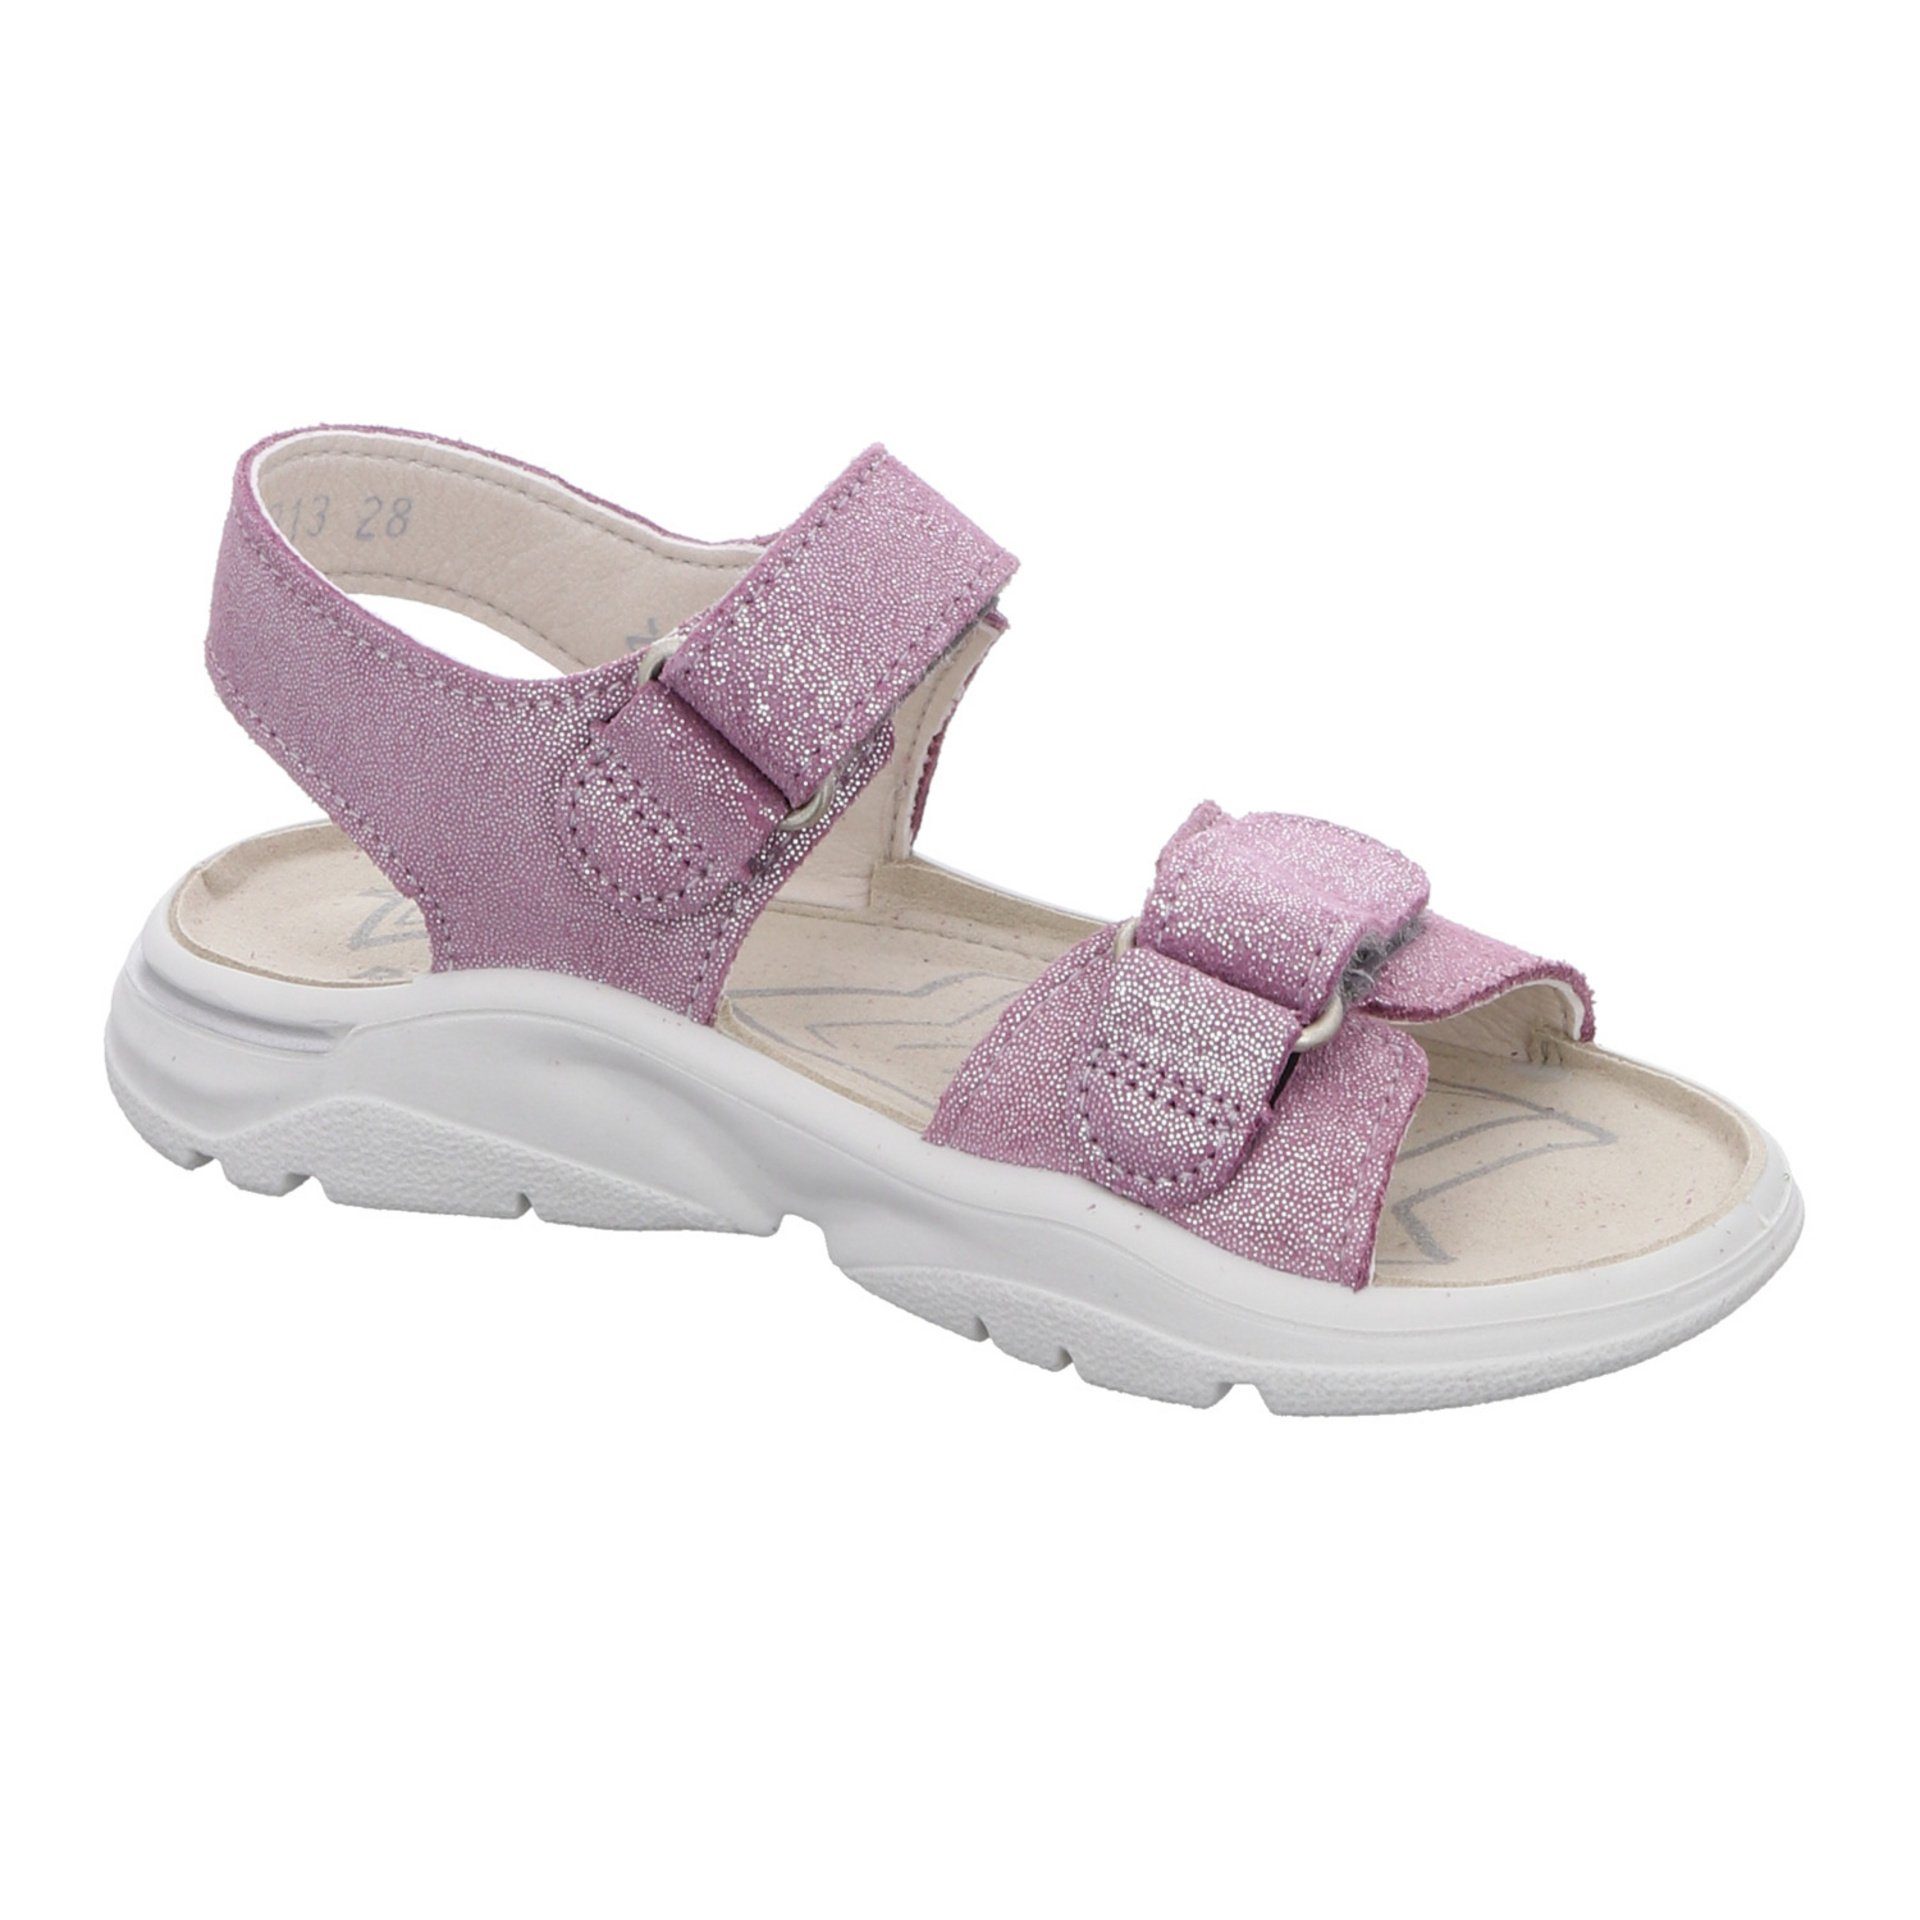 Ricosta Mädchen Sandalen Schuhe Sunny purple Sandale Kinderschuhe Veloursleder Sandale